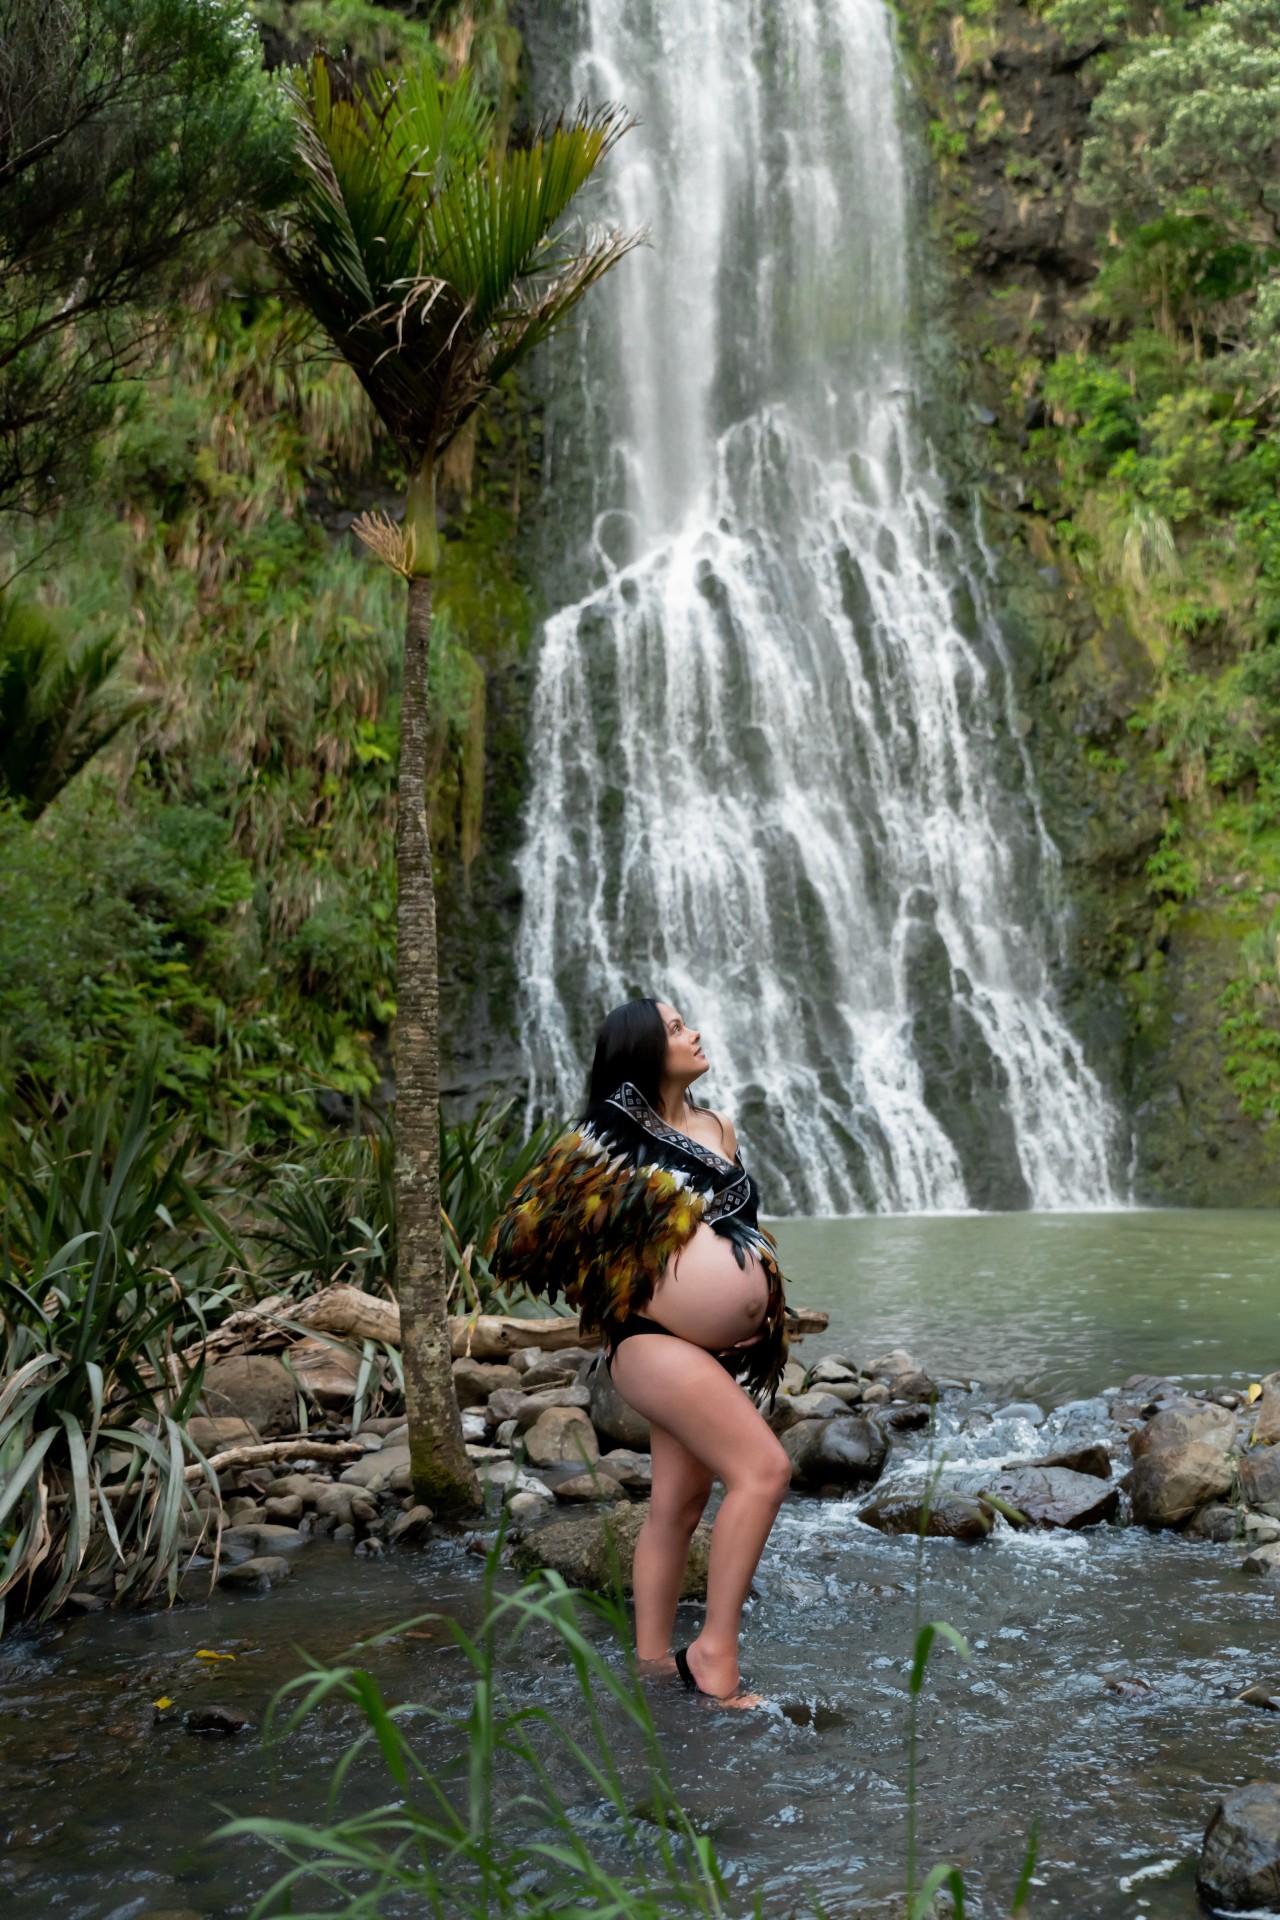 Waterfall maternity session with the lady wearing korrowai